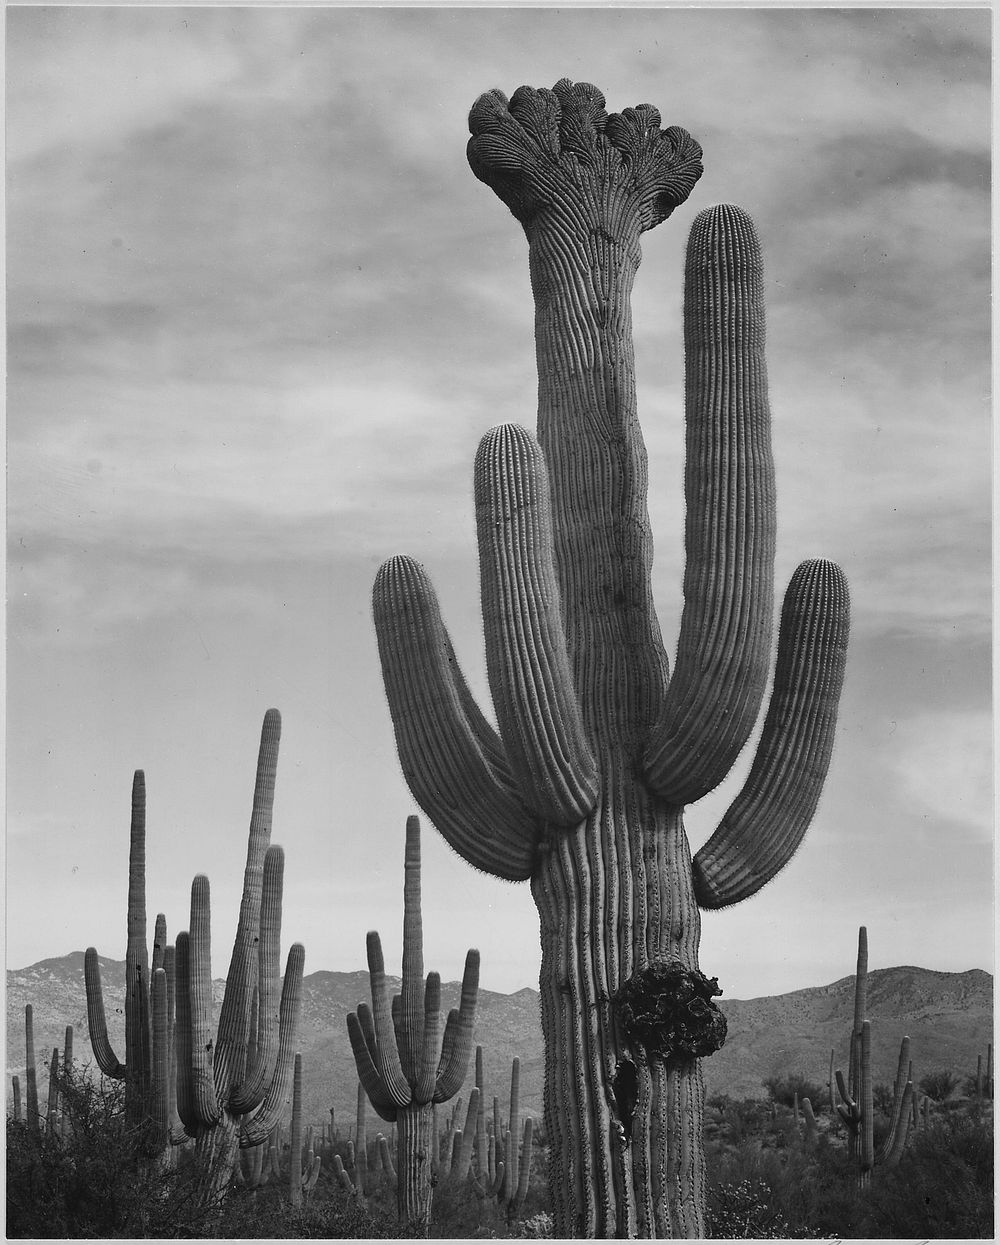 Full view of cactus with others surrounding, "Saguaros, Saguaro National Monument," Arizona. Photographer: Adams, Ansel…